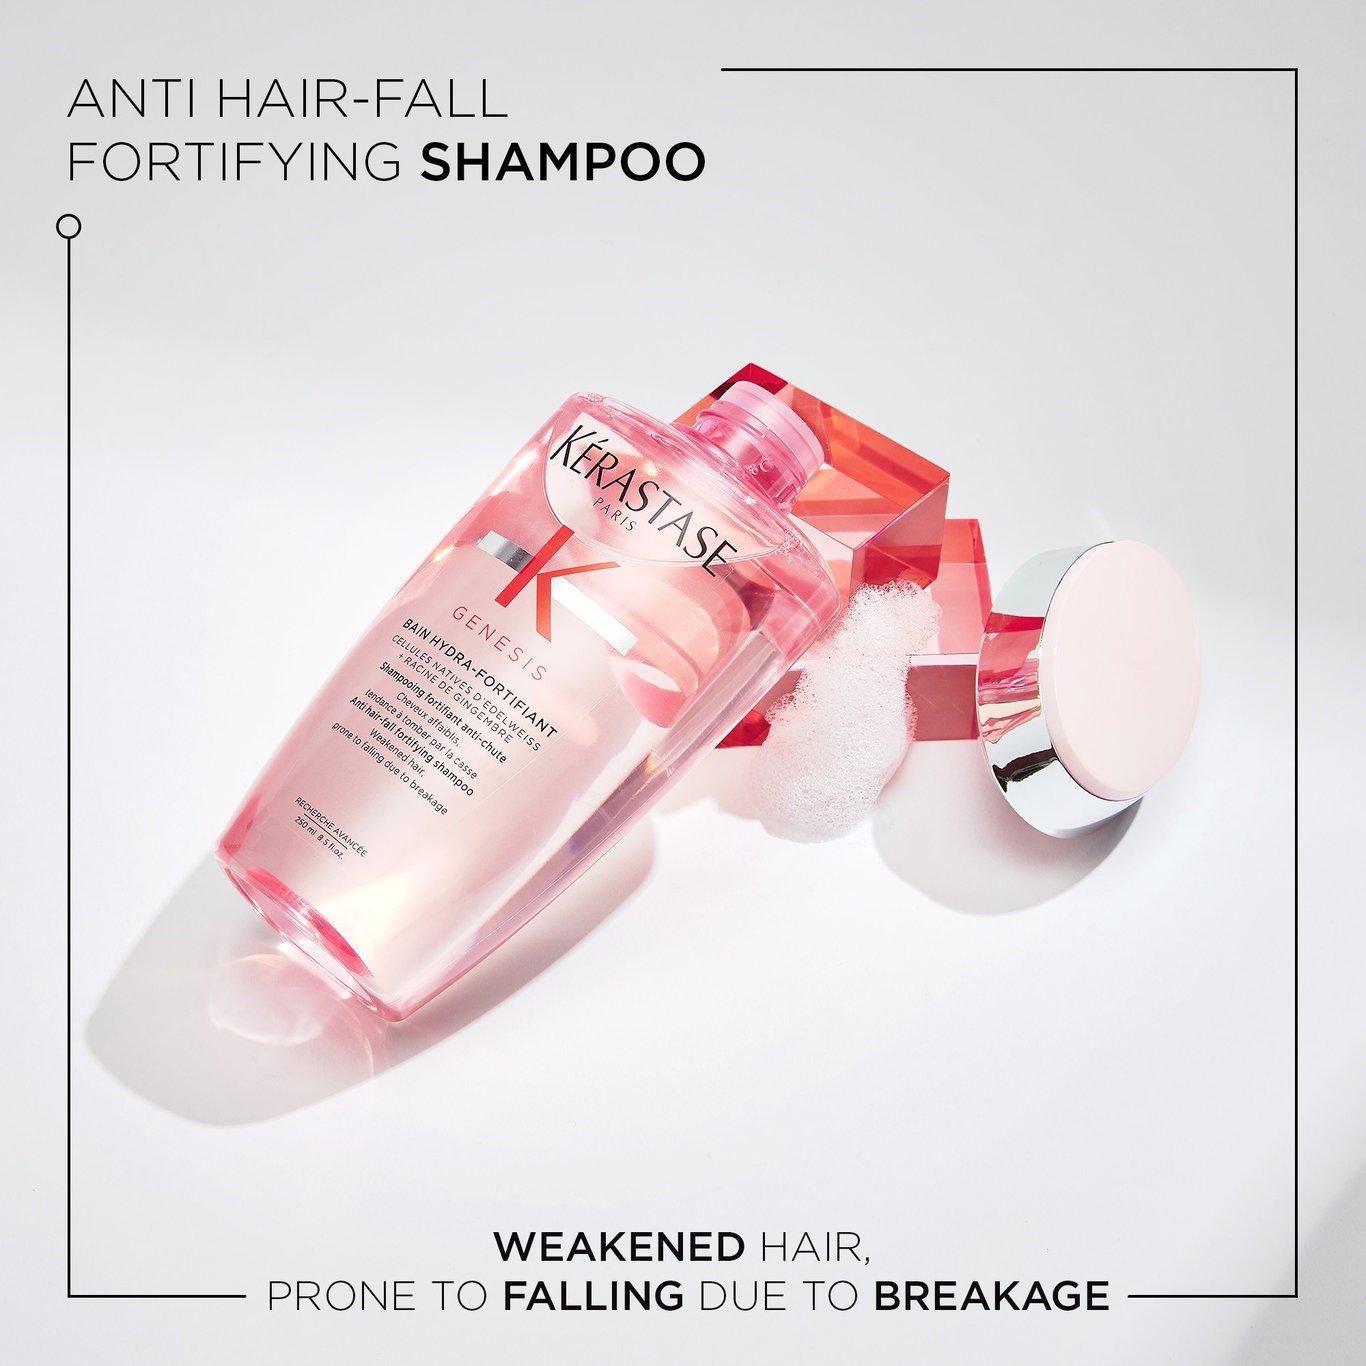 Anti hair-fall fortifying shampoo - Weakened hair prone to falling due to breakage